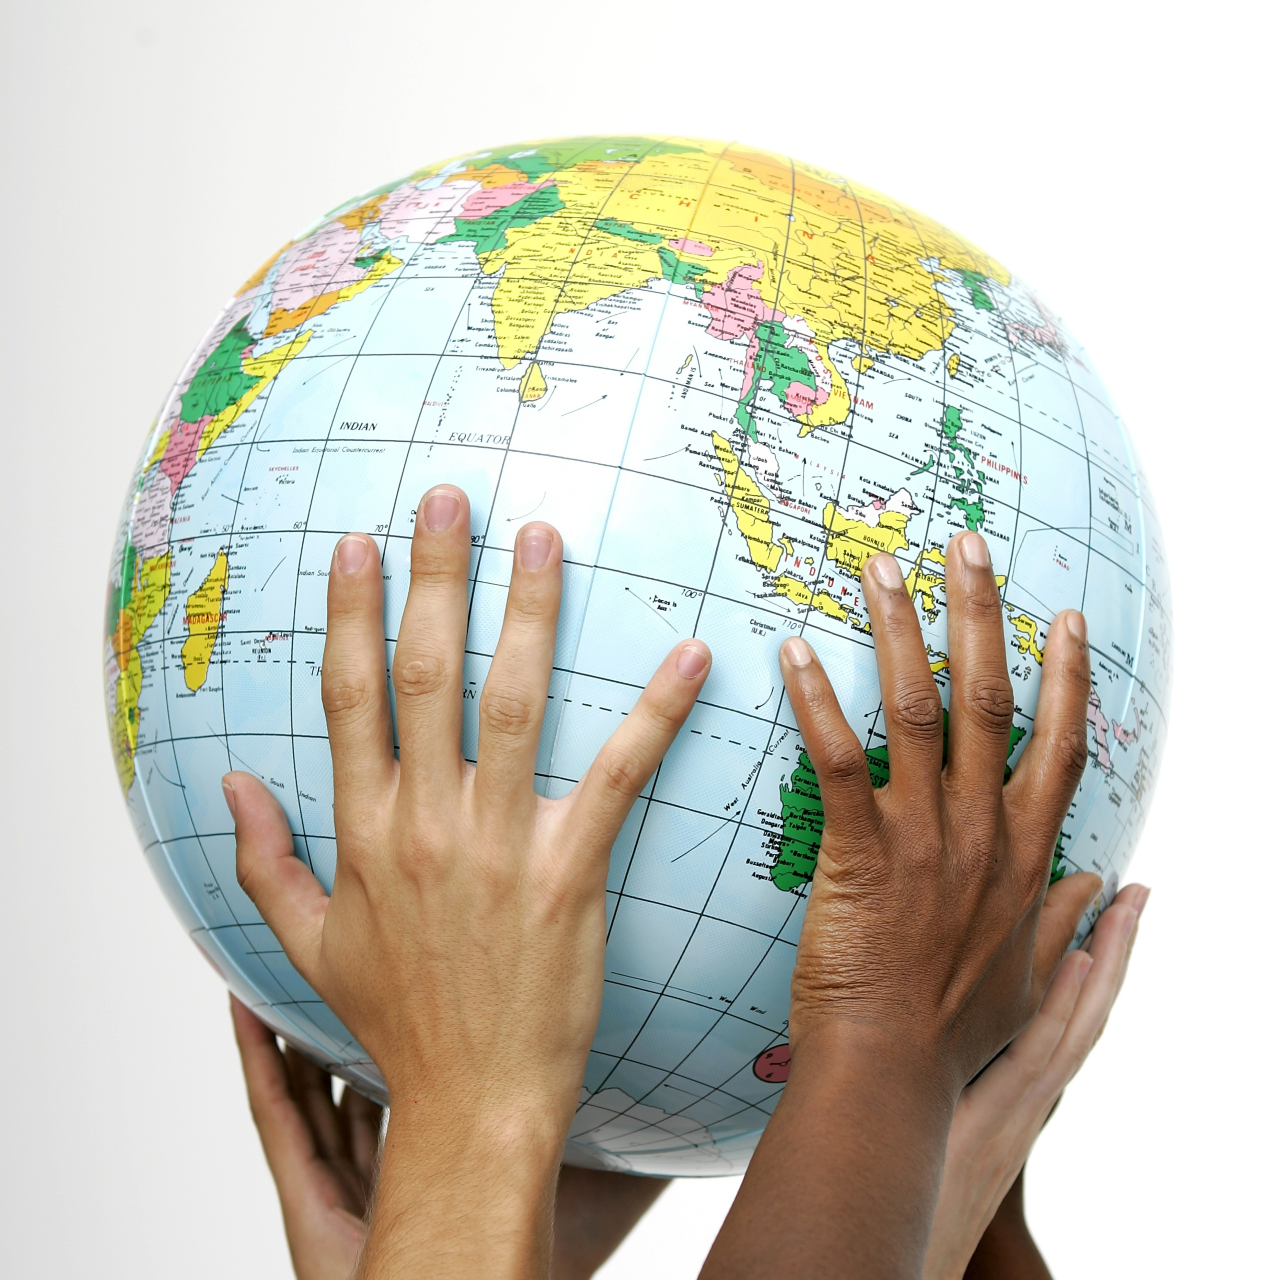 Five different children's hands raising up a globe